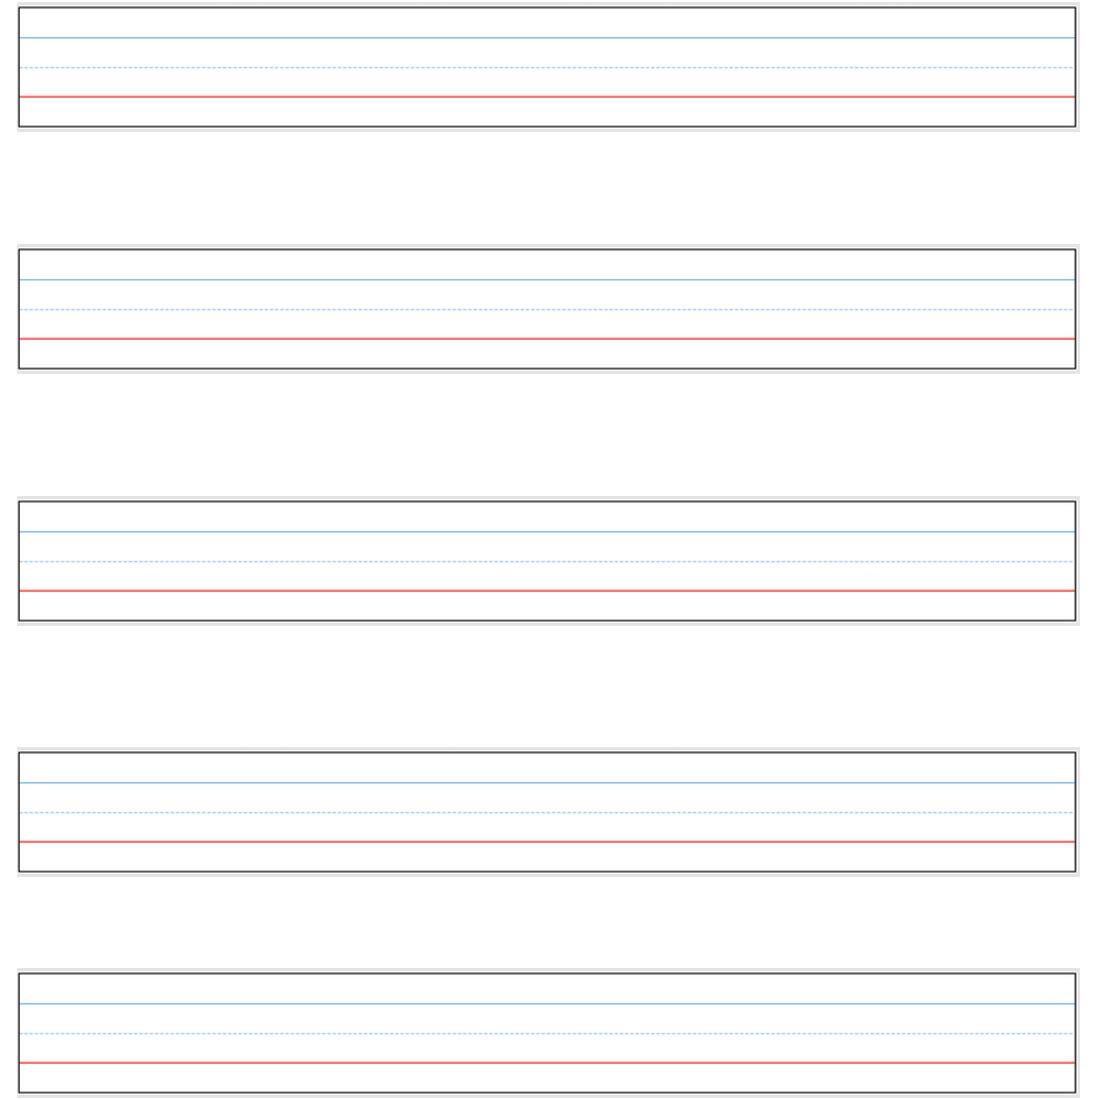 Five blank Magnetic Sentence Strips